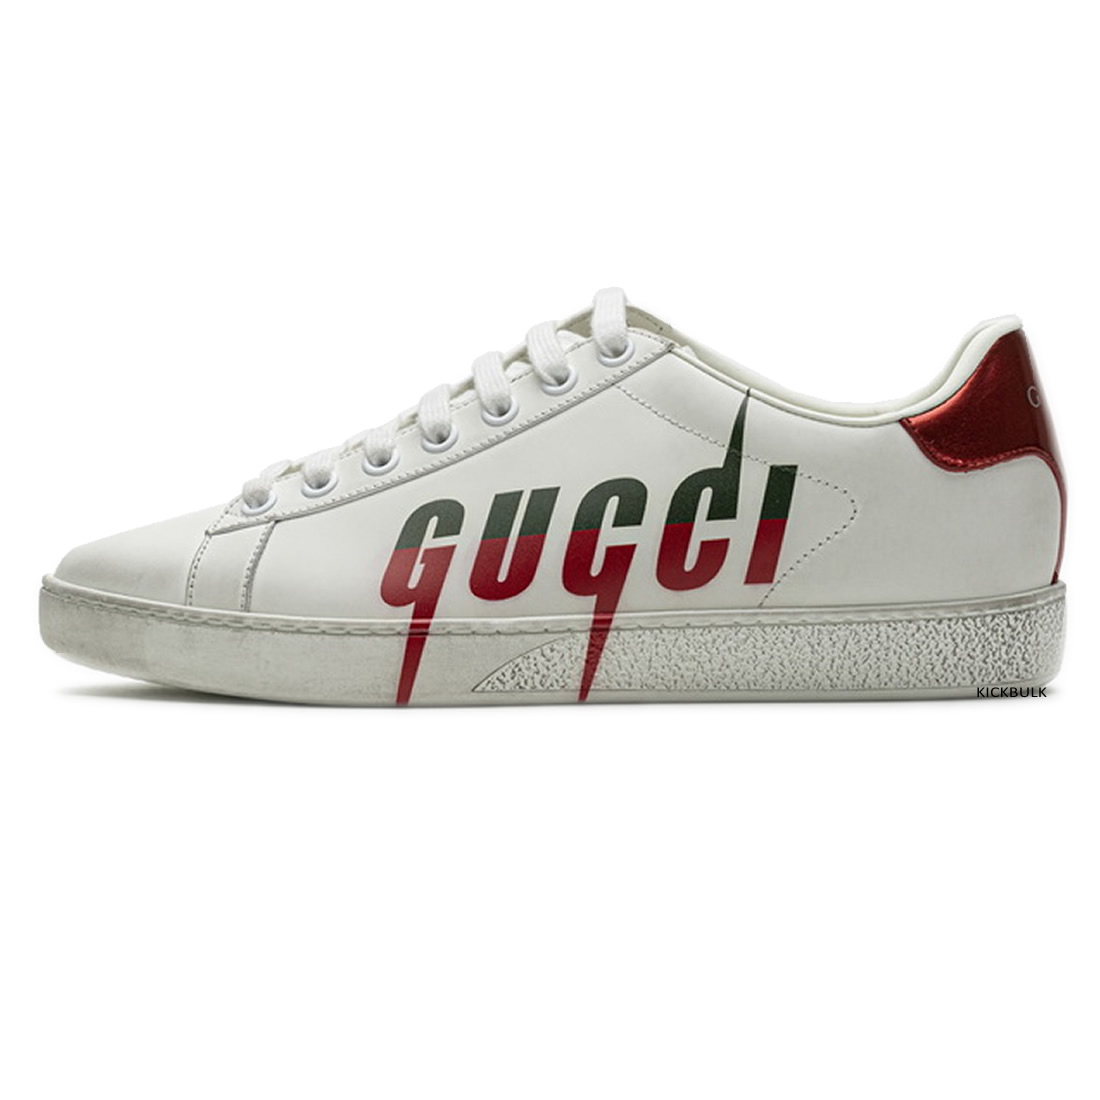 Gucci Lightning Sneakers 429446a39gq9085 1 - www.kickbulk.co